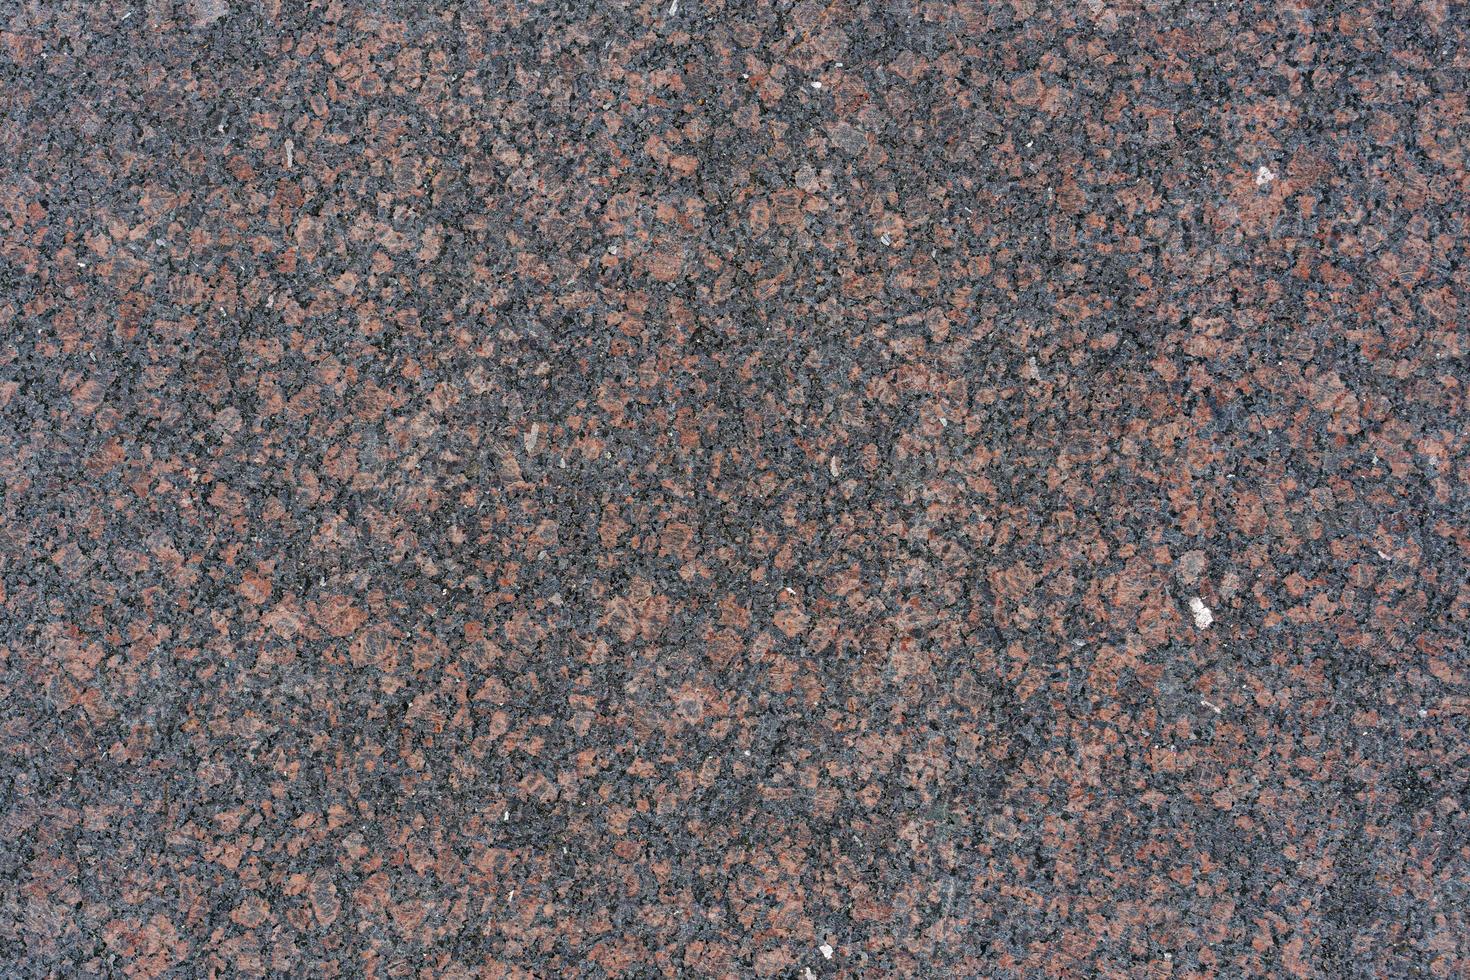 Granite texture, granite background, granite stone photo